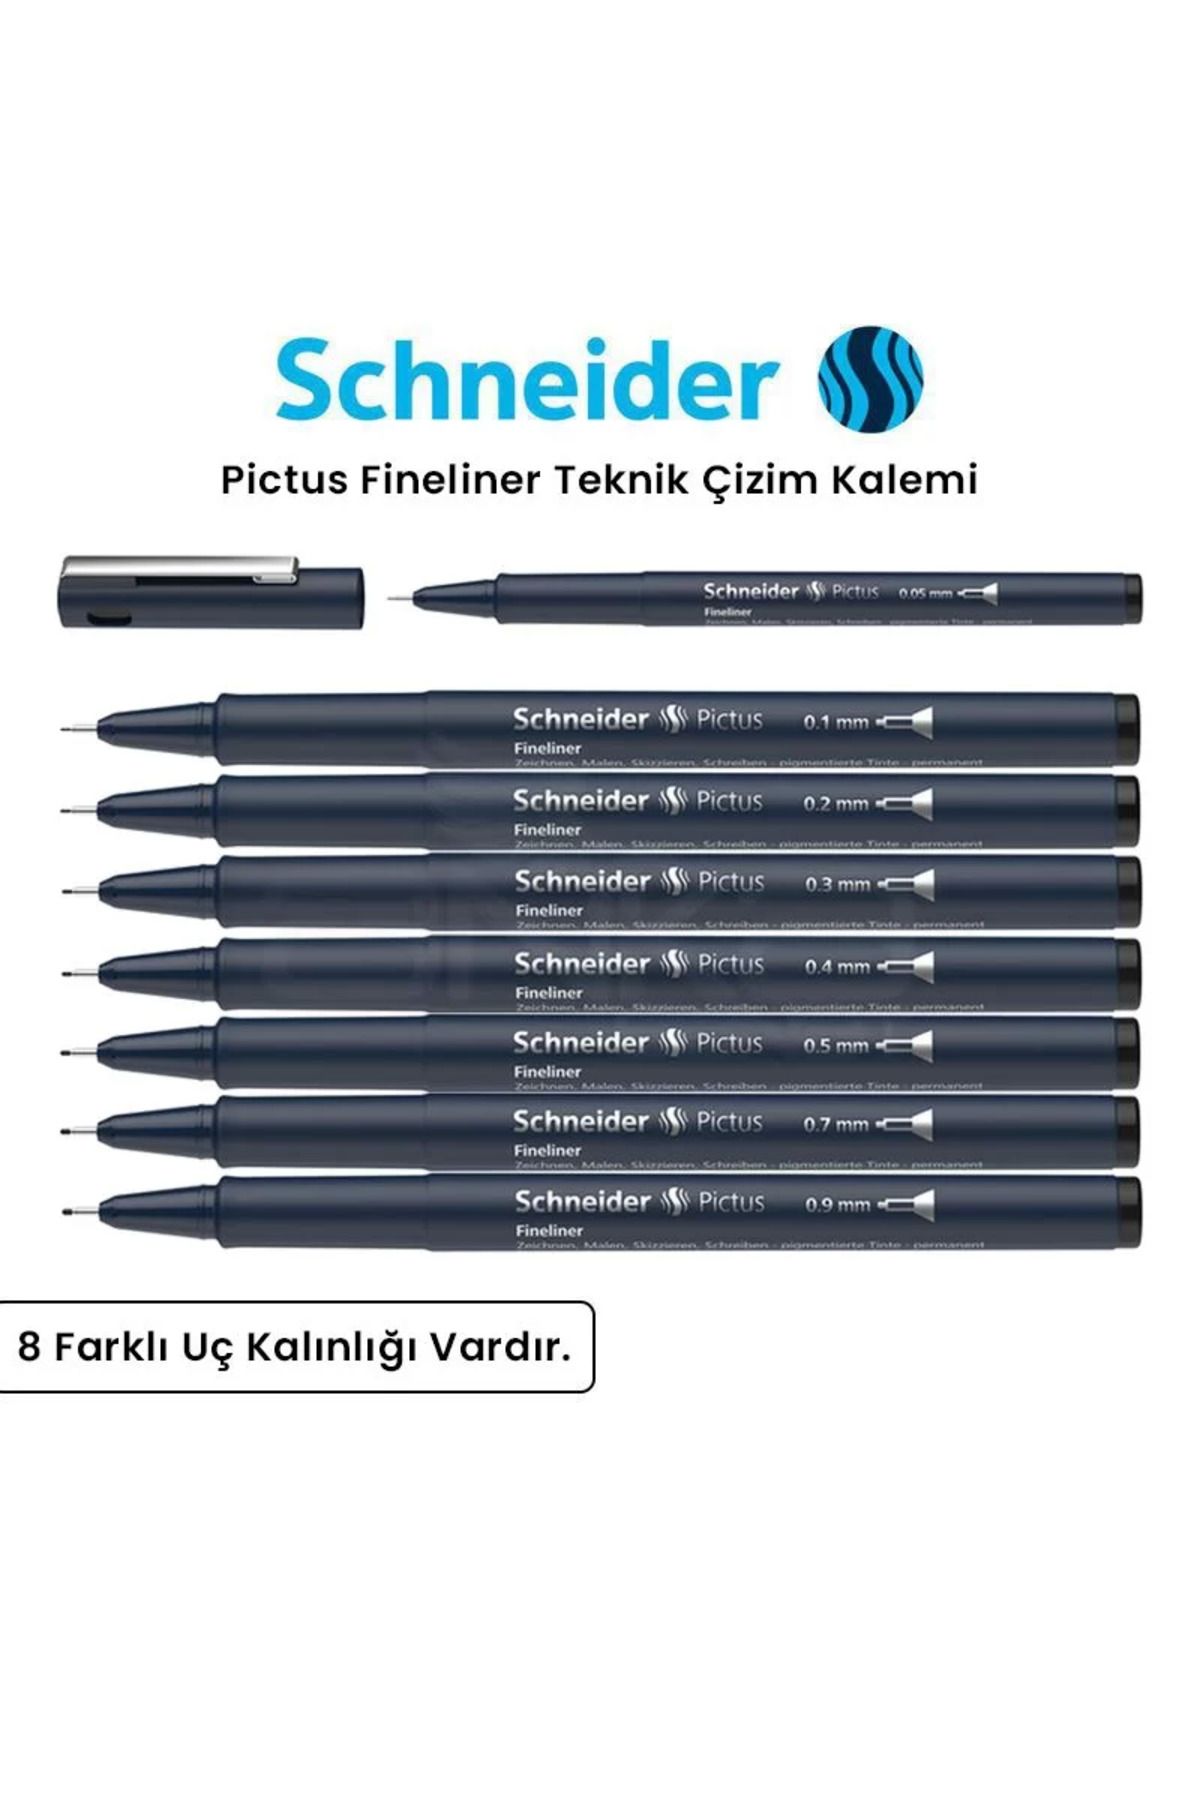 Schneider Pictus Fineliner Teknik Çizim Kalemi